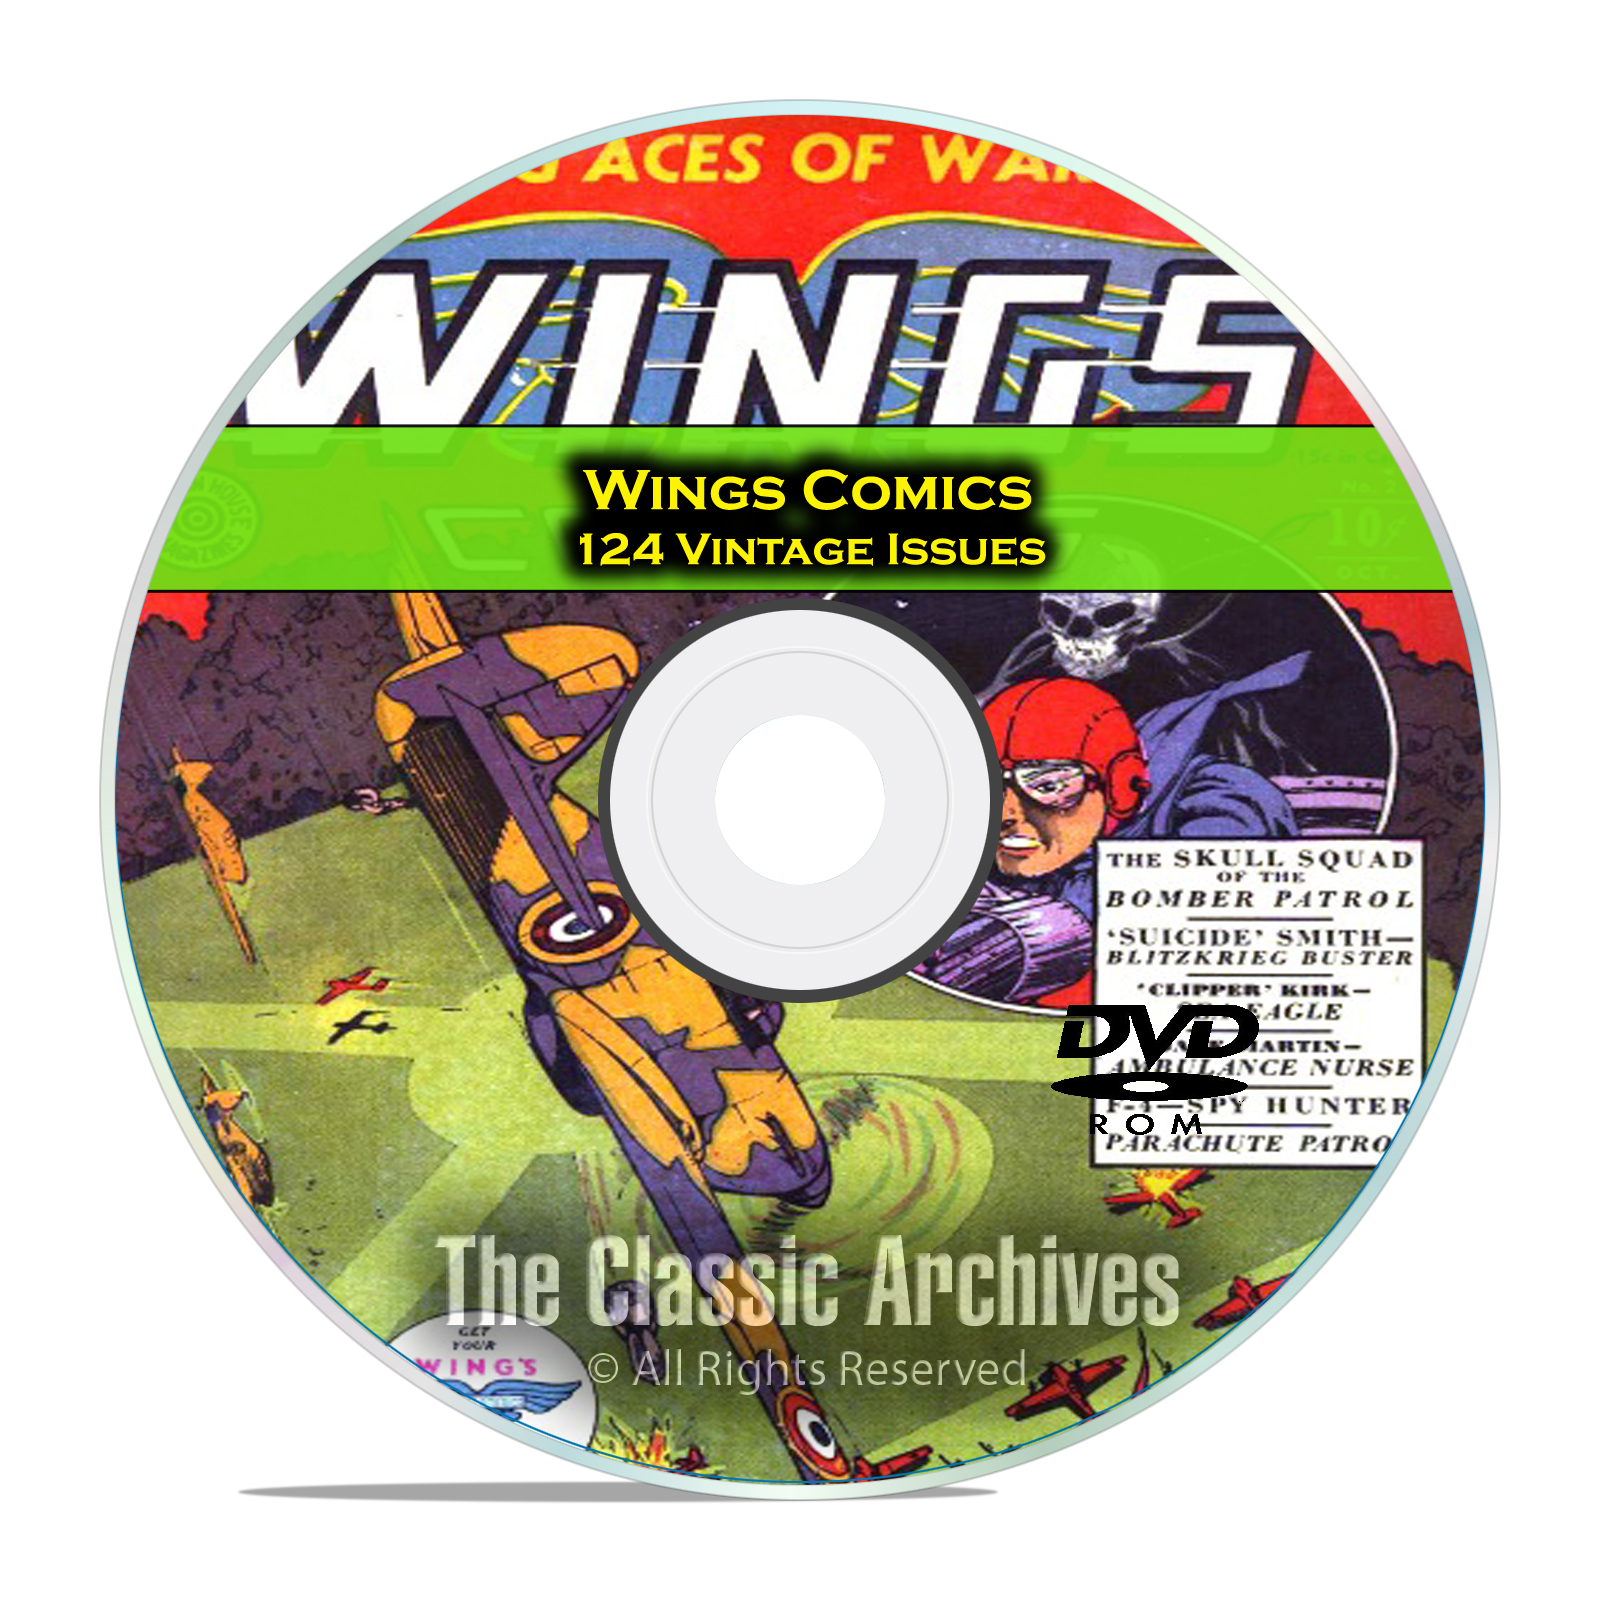 Wings Comics, Fiction House, 124 Issues, Vintage Golden Age Comics PDF DVD